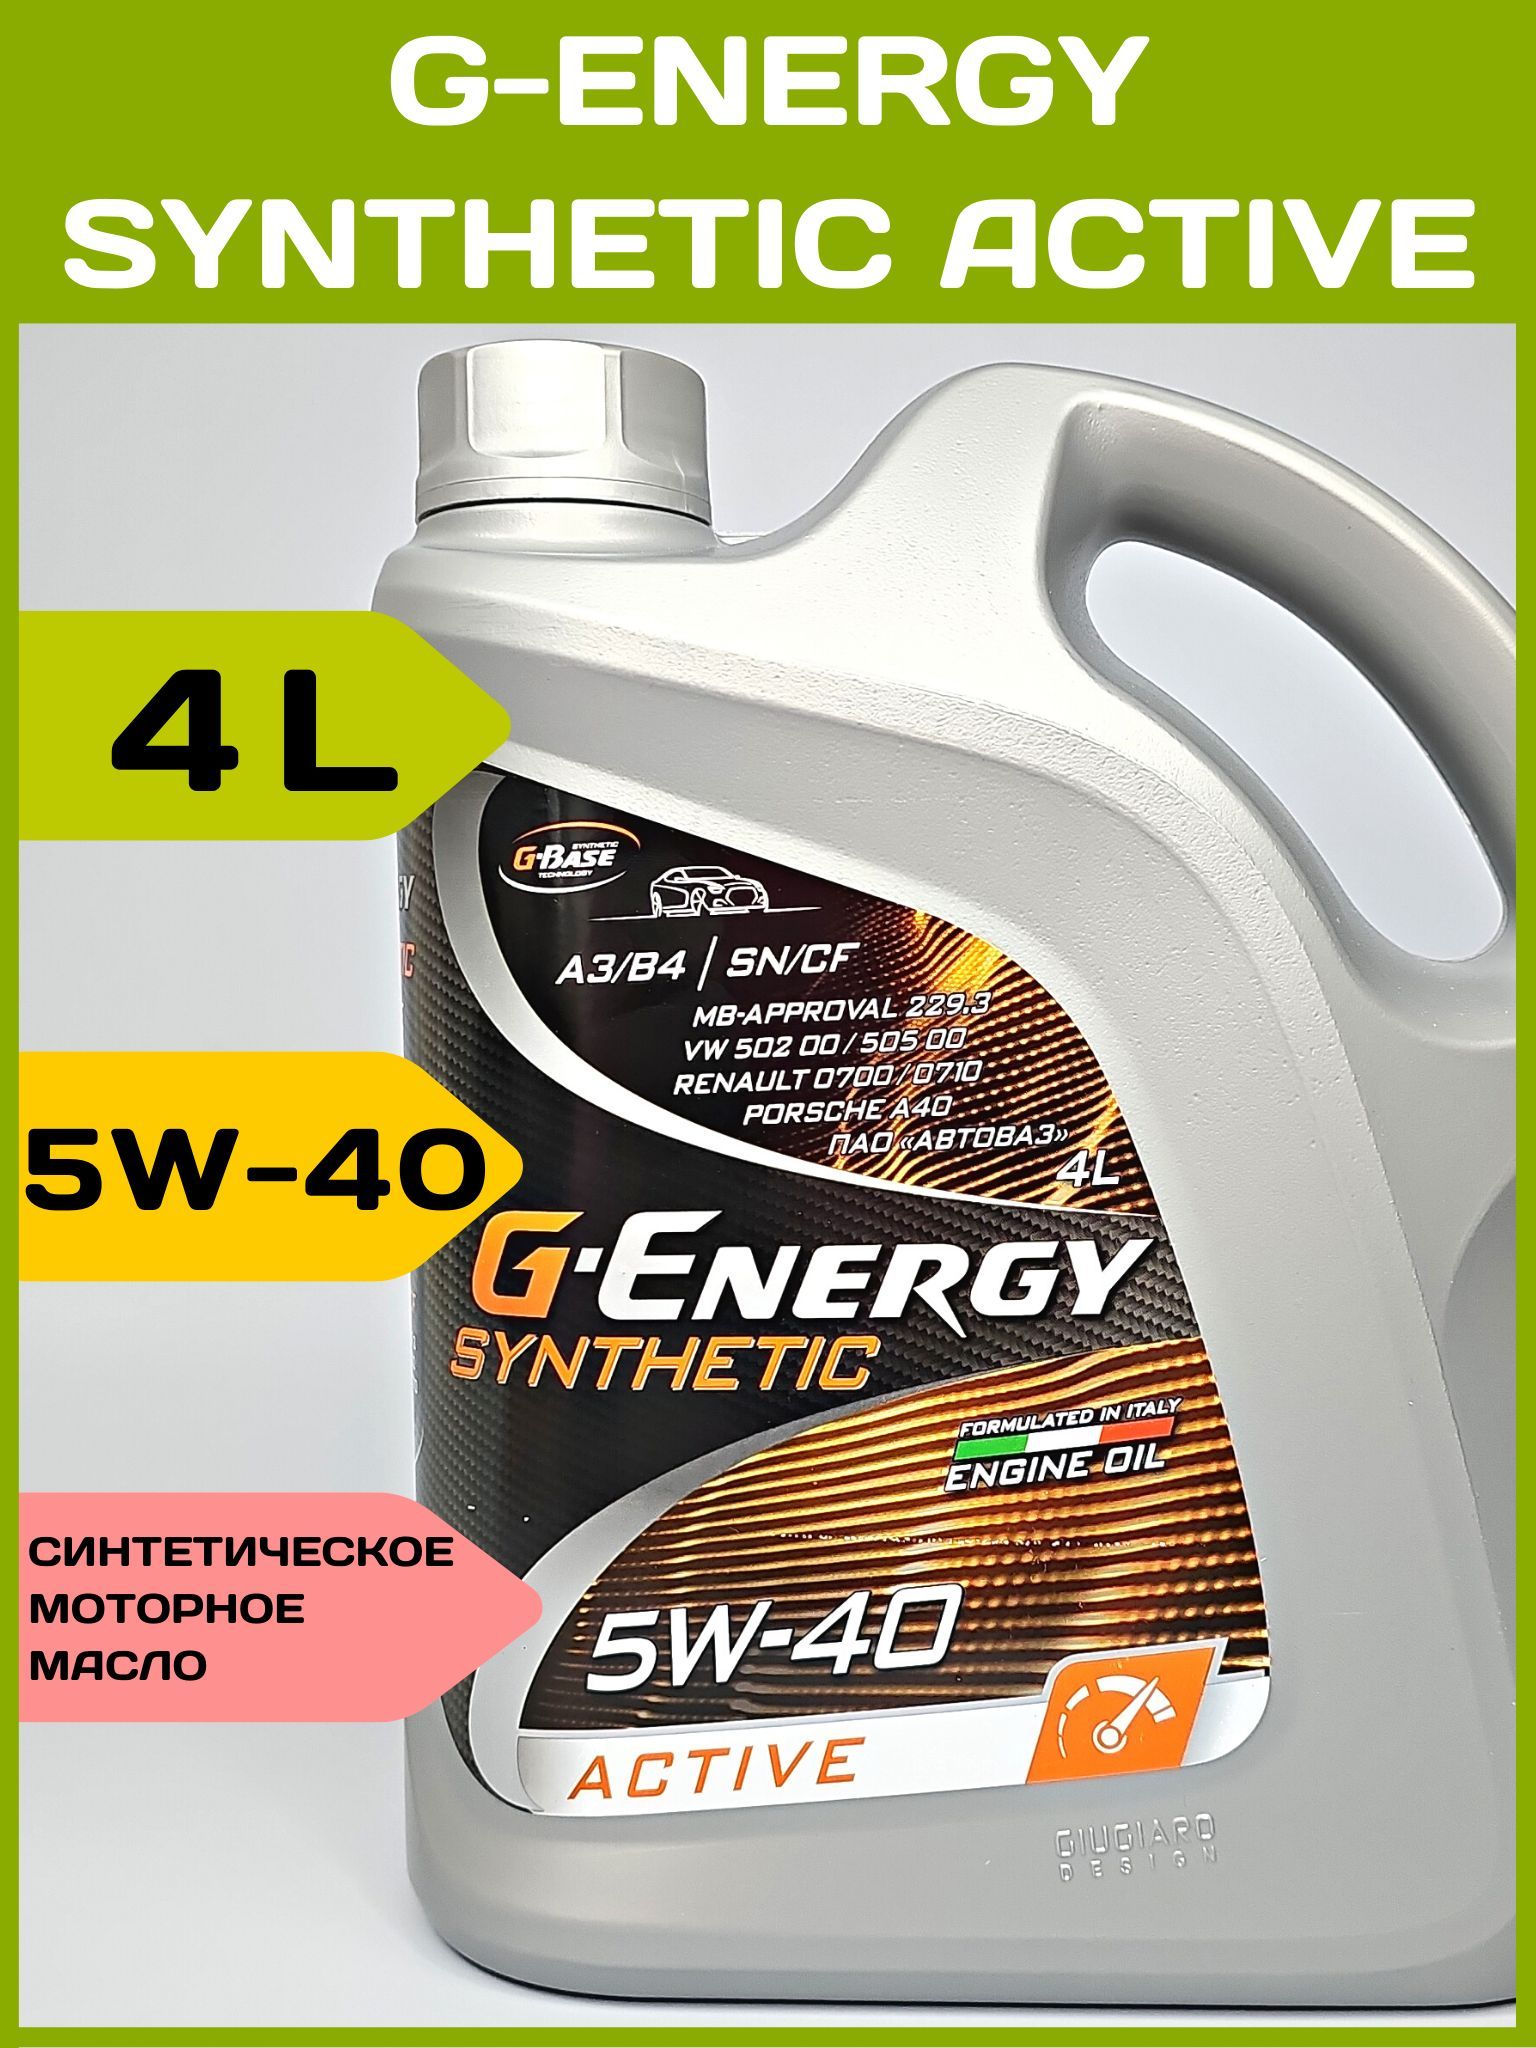 G Energy 5w40 Актив. G-Energy Synthetic Active 5w-40. Масло g Energy 5w40 синтетика. G-Energy Synthetic Active 5w-30. Energy synthetic active 5w40